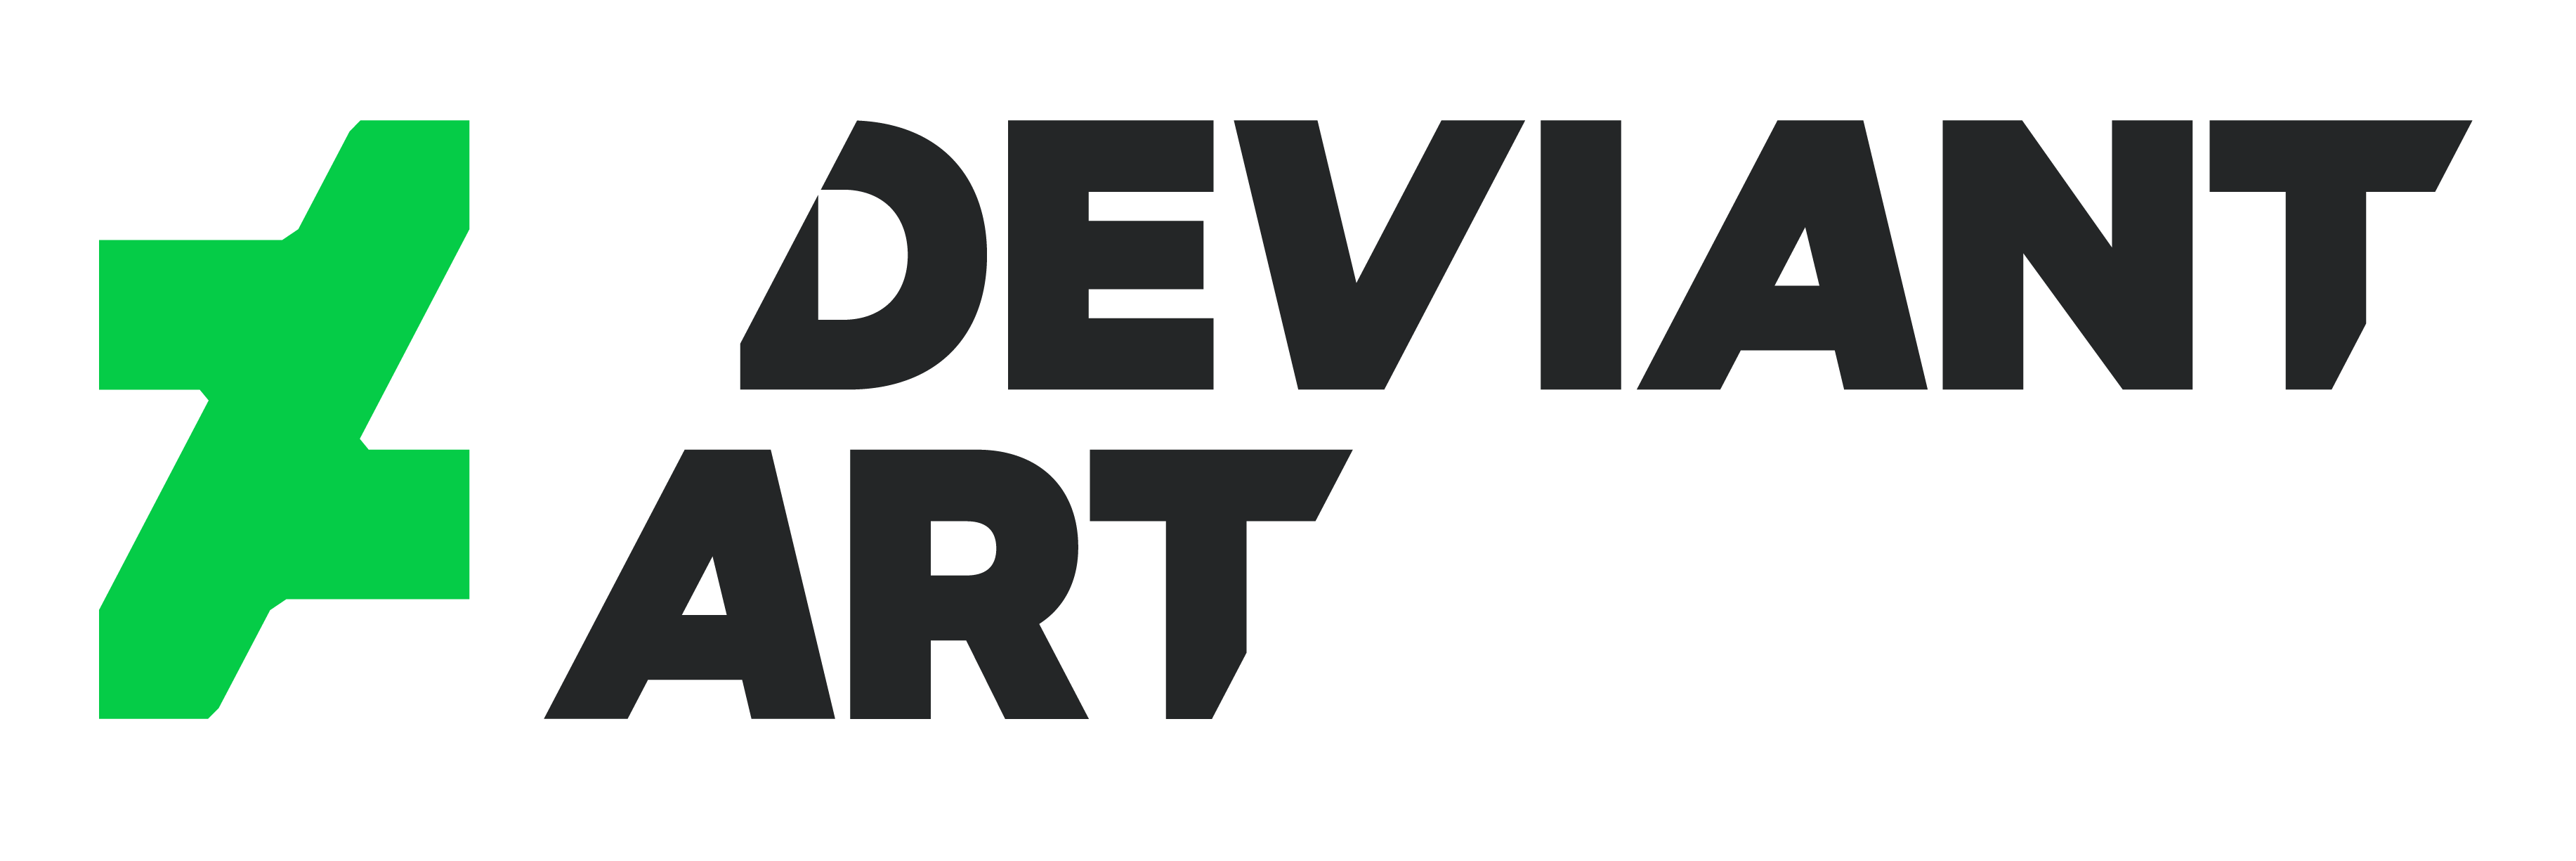 2 2 deviantart logo png 1